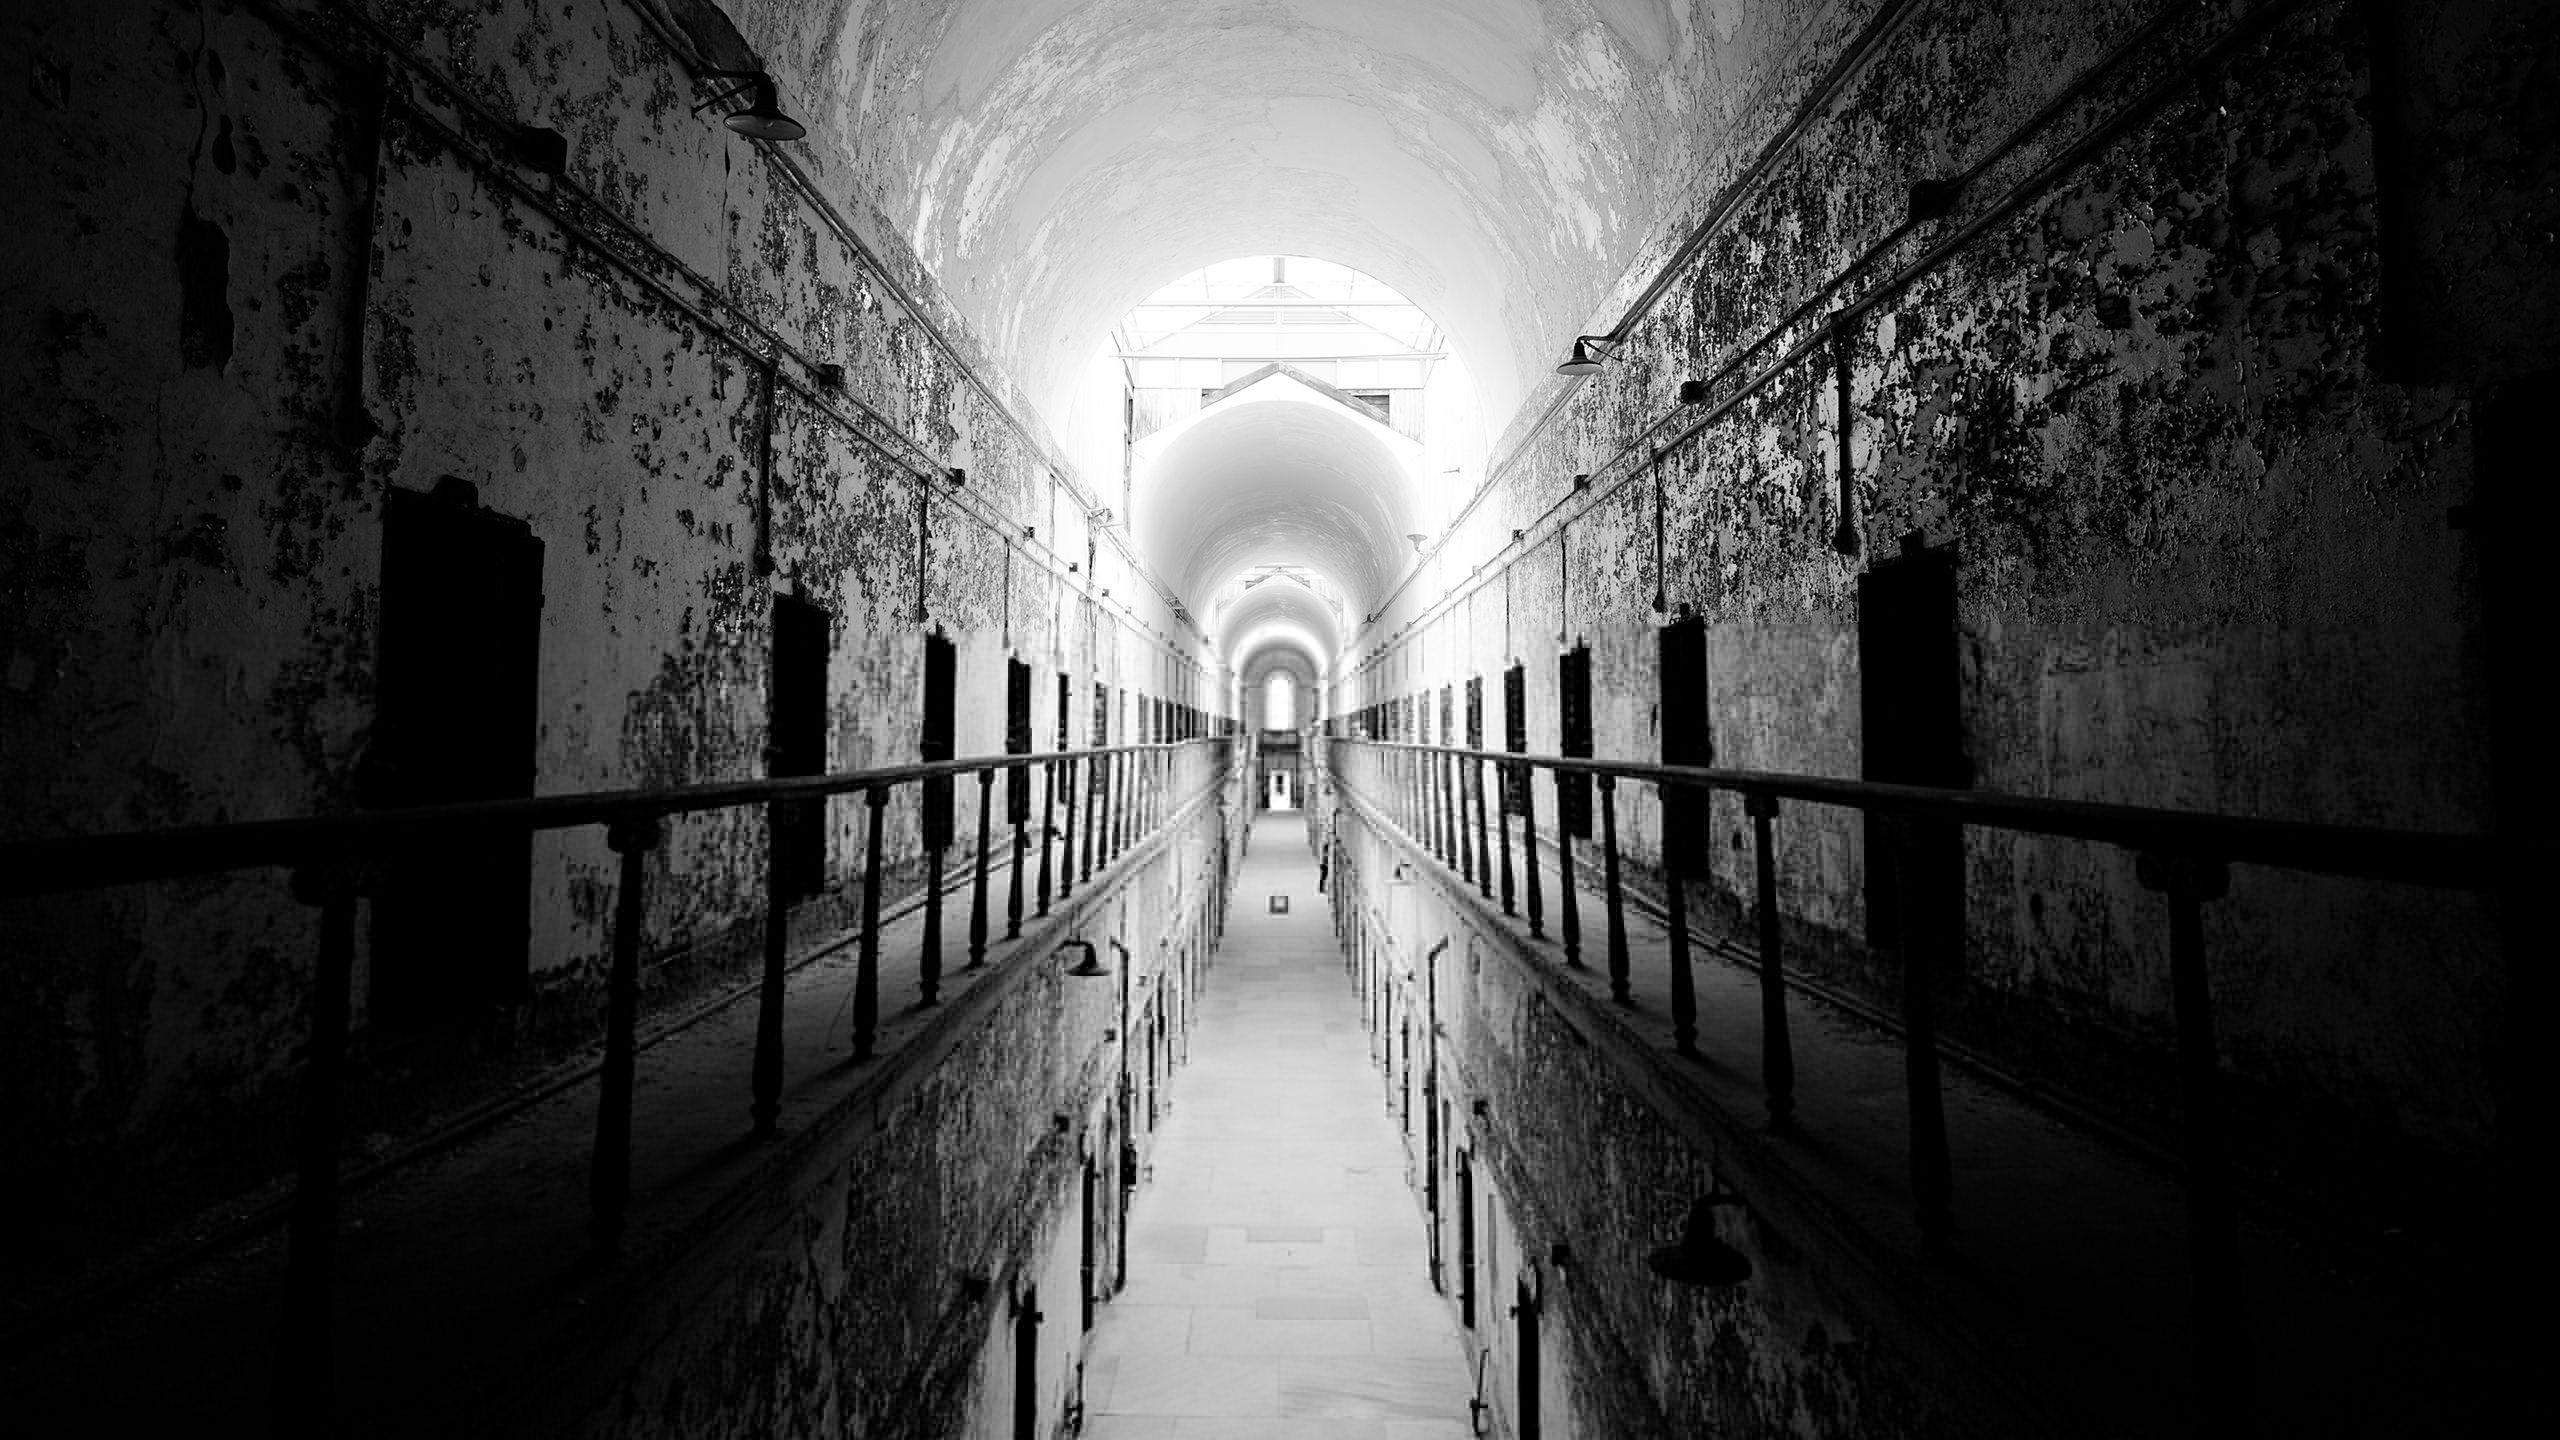 Inside prison [Wallpaper]